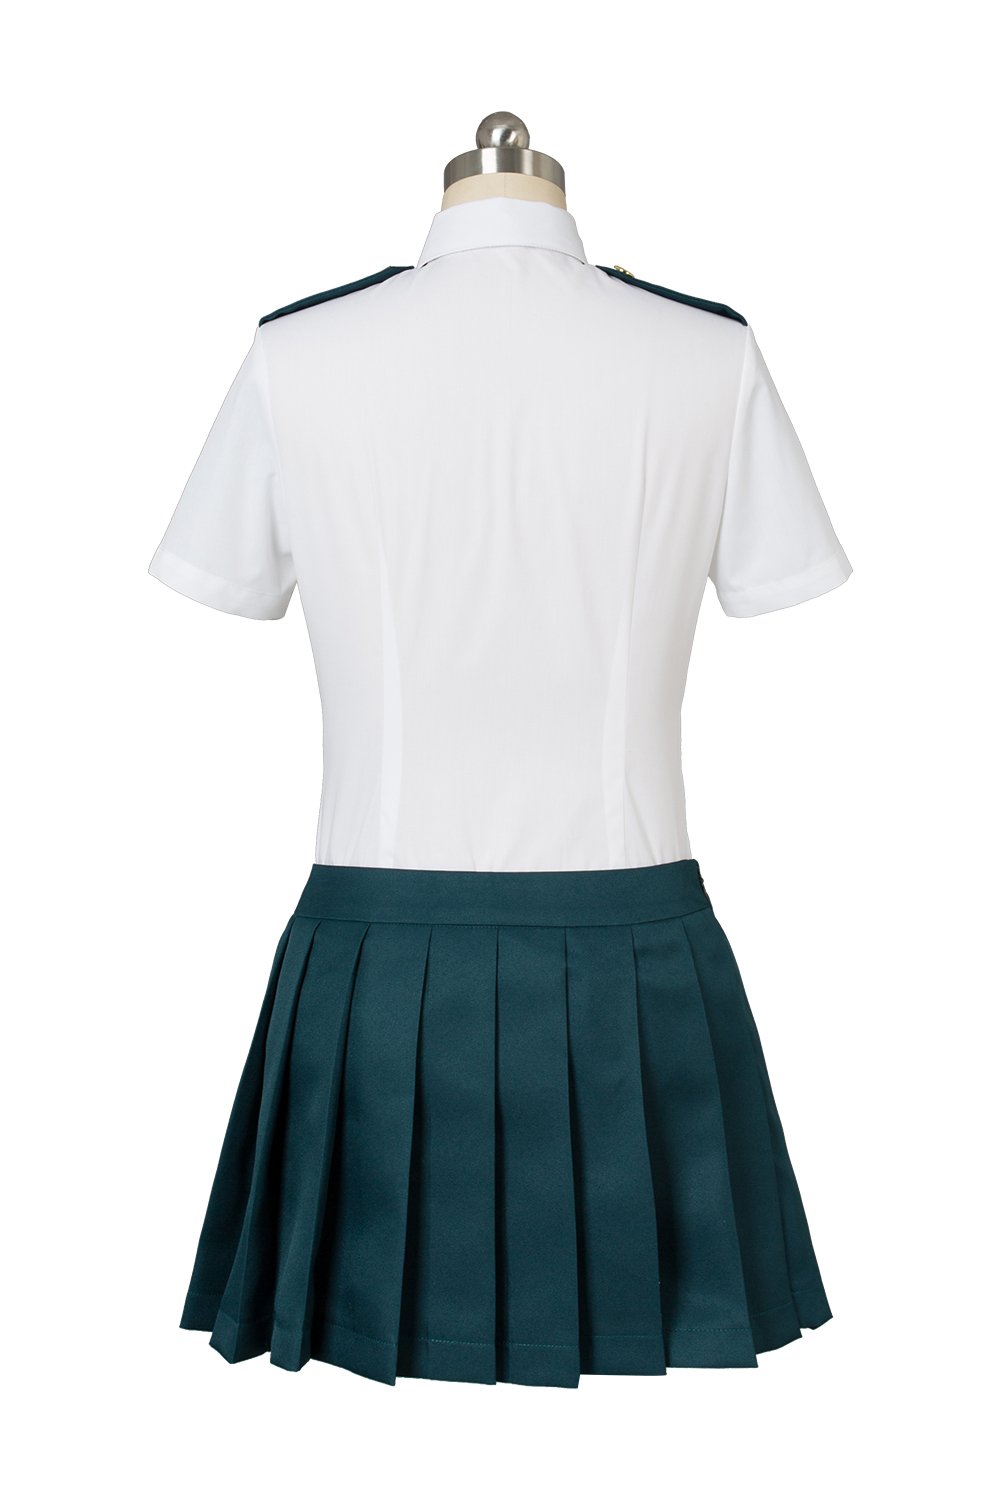 Boku no Hero Academia My Hero Academia Ochako Uraraka Tsuyu Asui Summer Uniform Dress Cosplay Costum